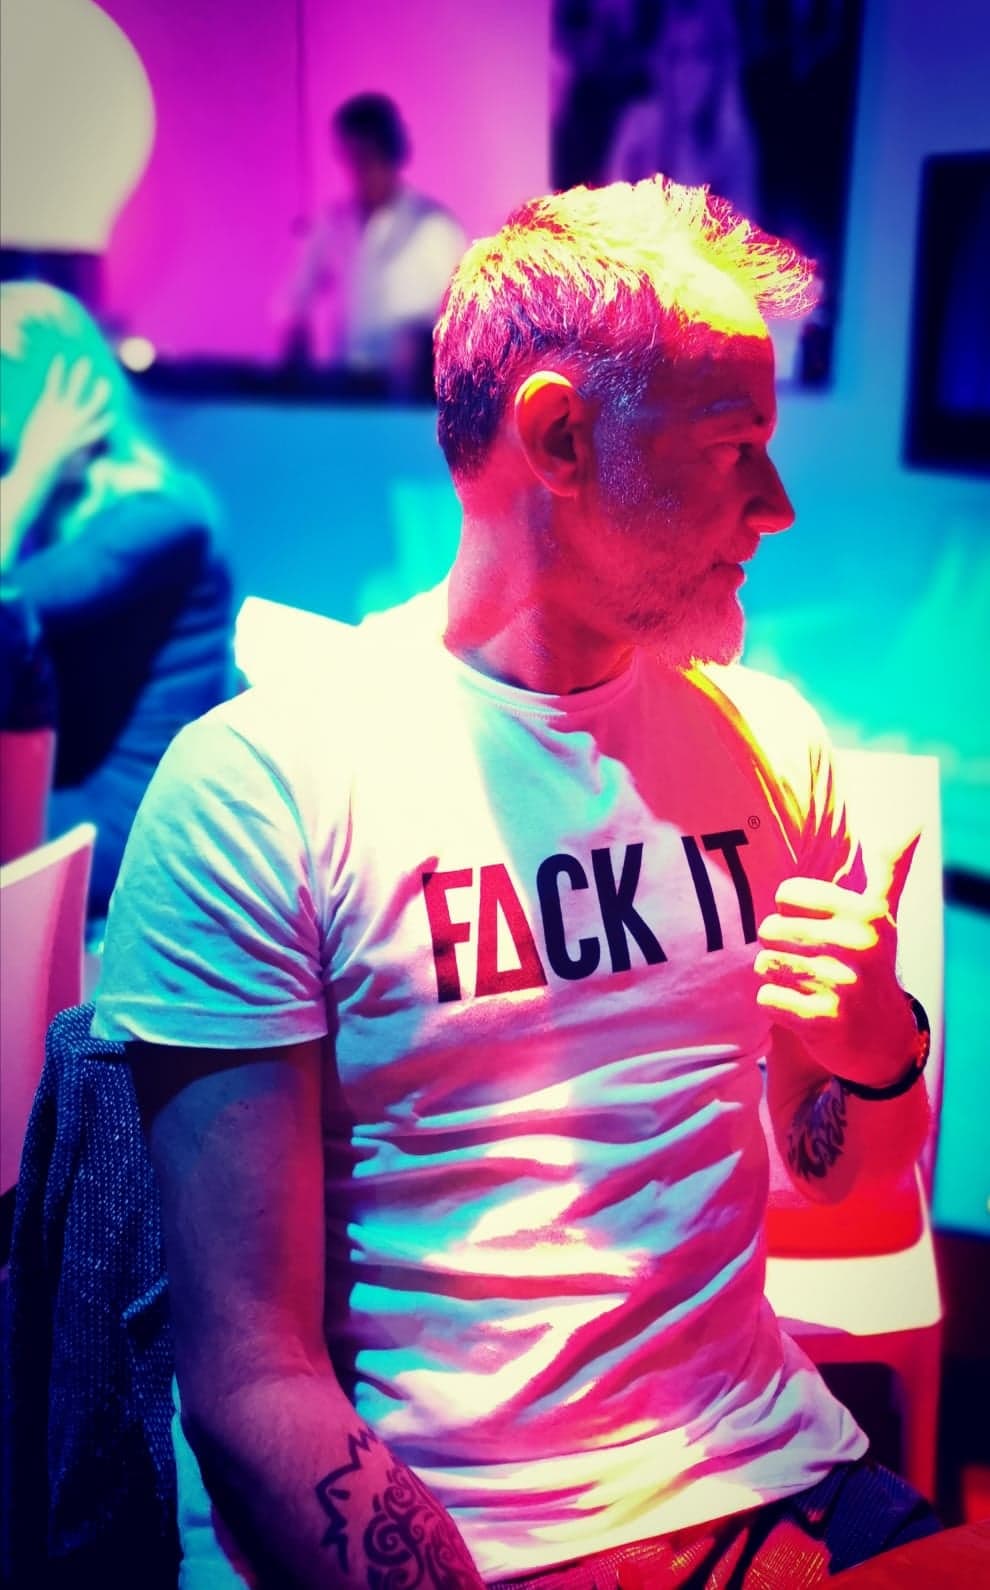 Fack It T-Shirt photo review